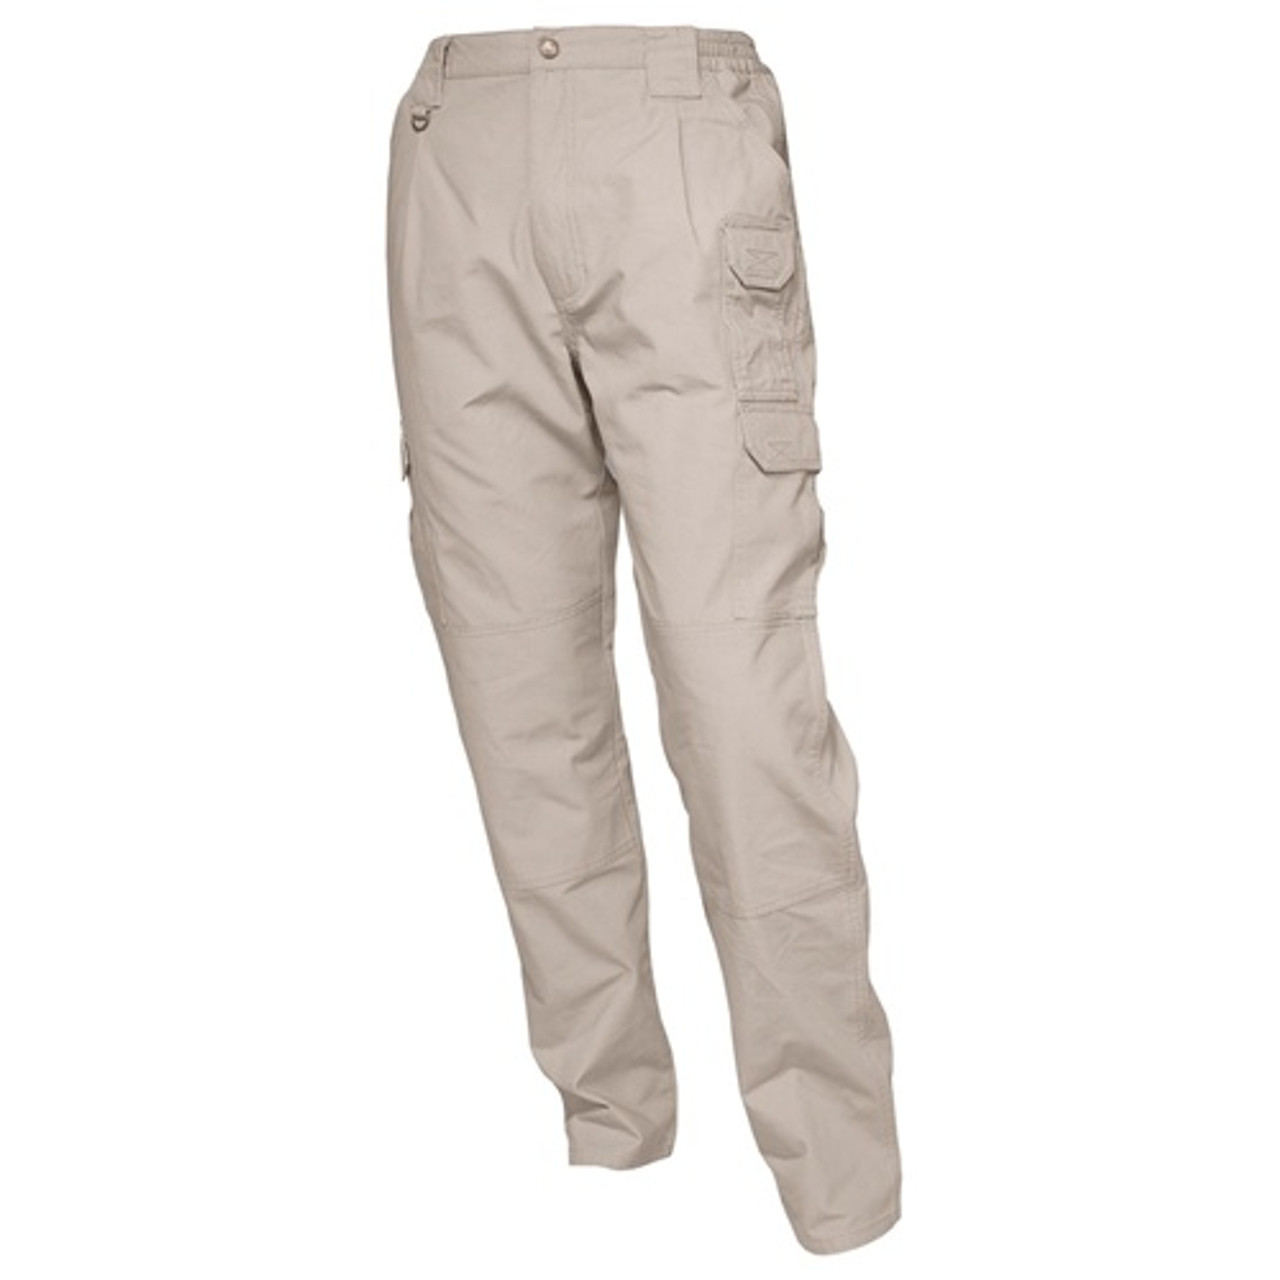 Original 5.11 Tactical Pants